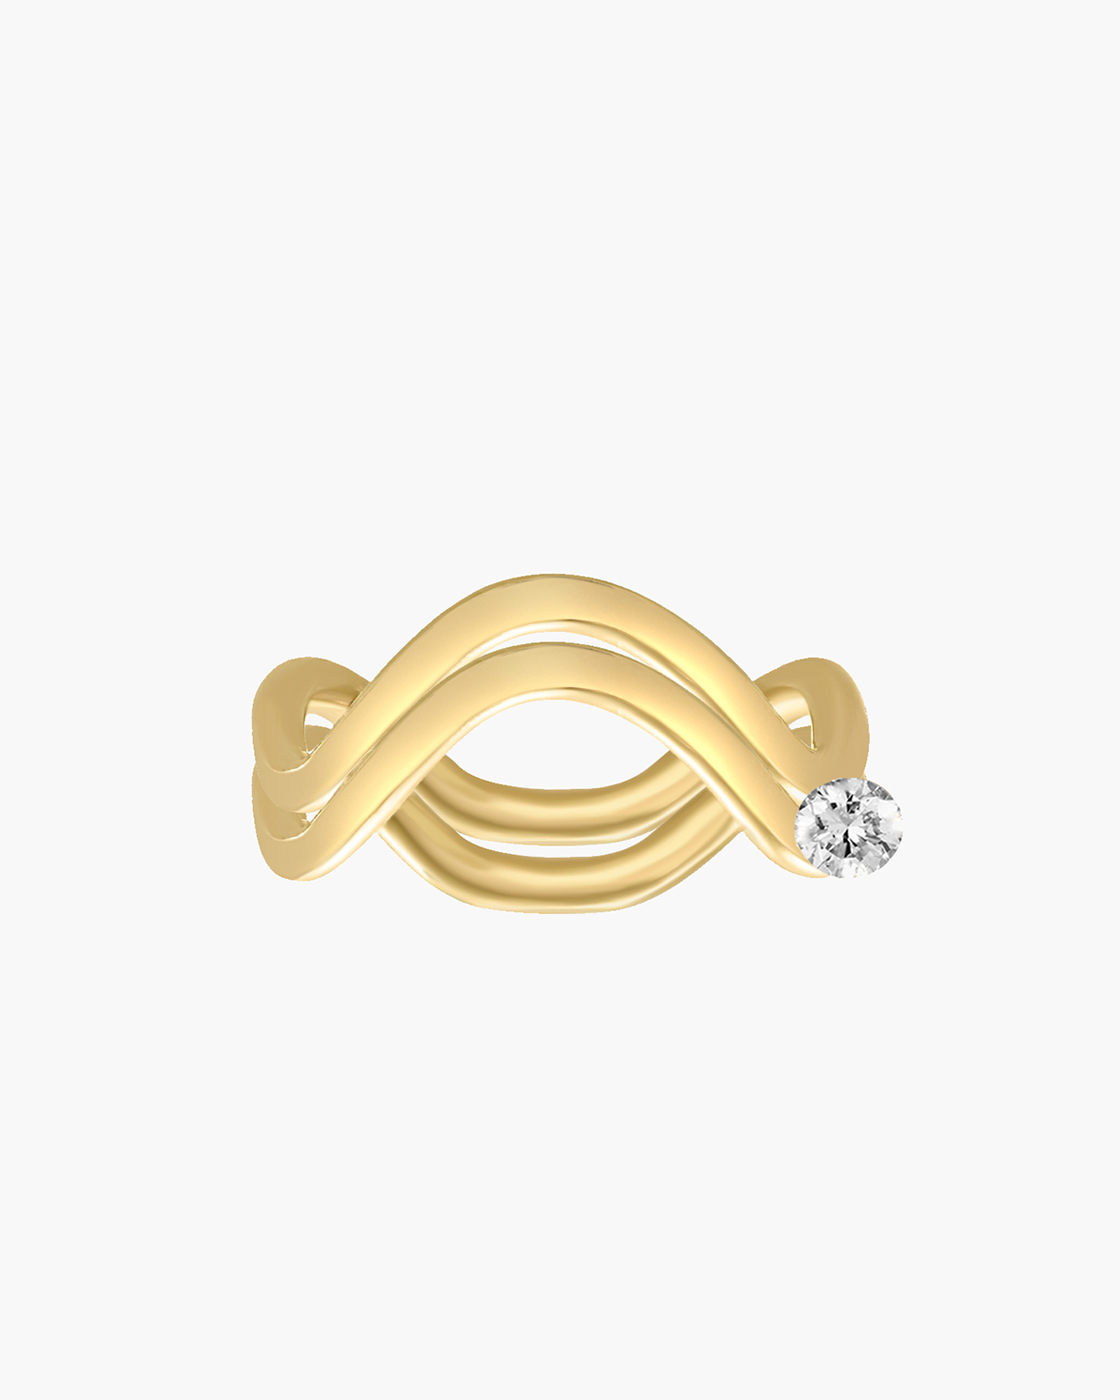 Gelbgold Doppel-Petite-Comete-Ring mit rundem Brillanten zur Verlobung